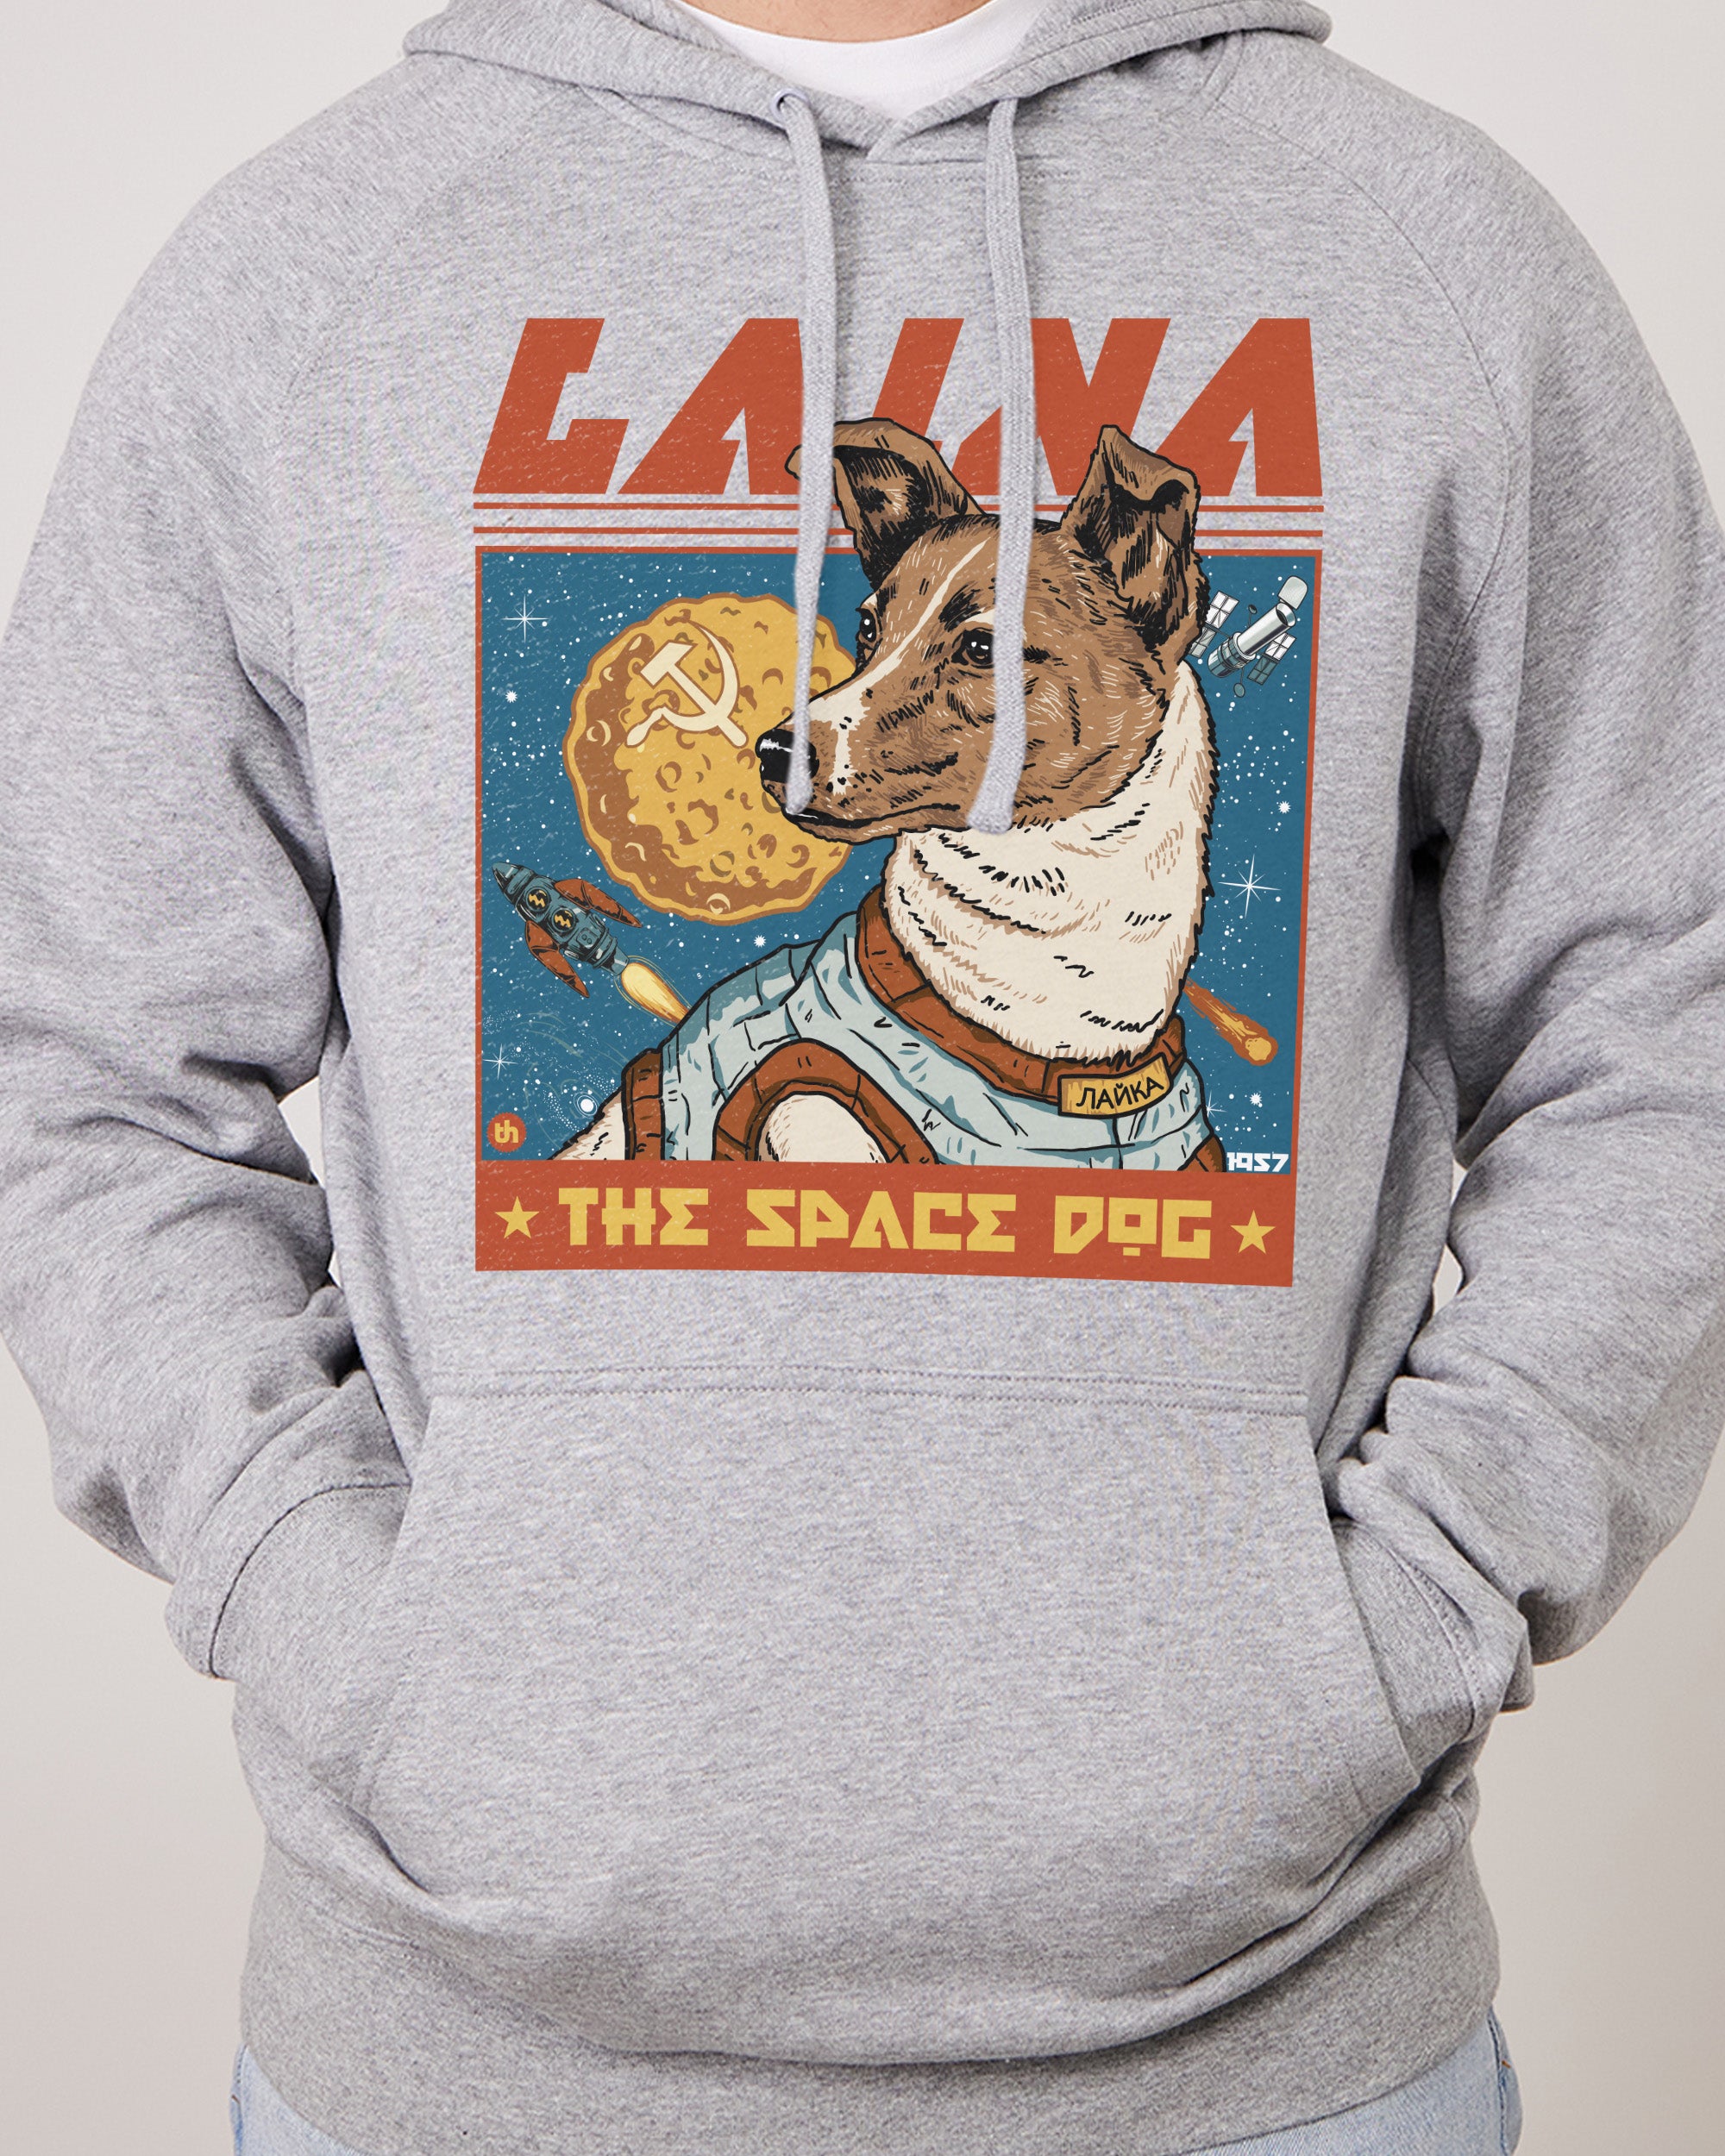 Laika the Space Dog Hoodie Australia Online